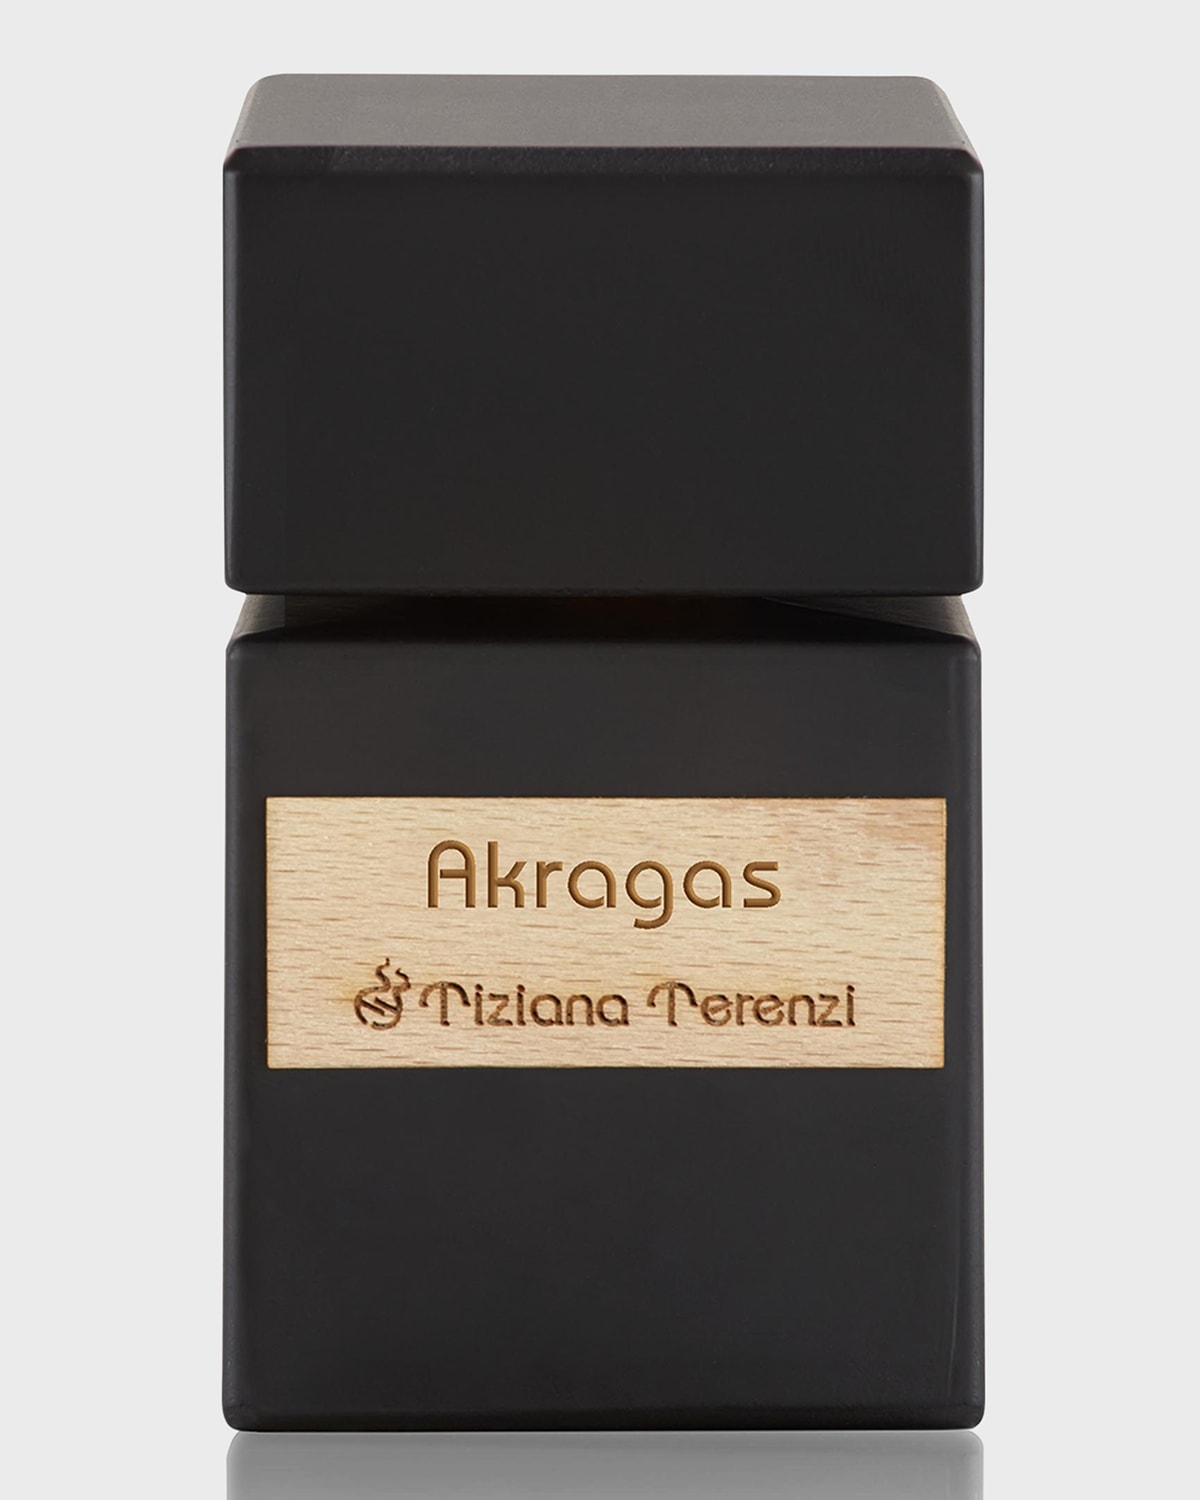 Akragas Extrait de Parfum, 3.4 oz.